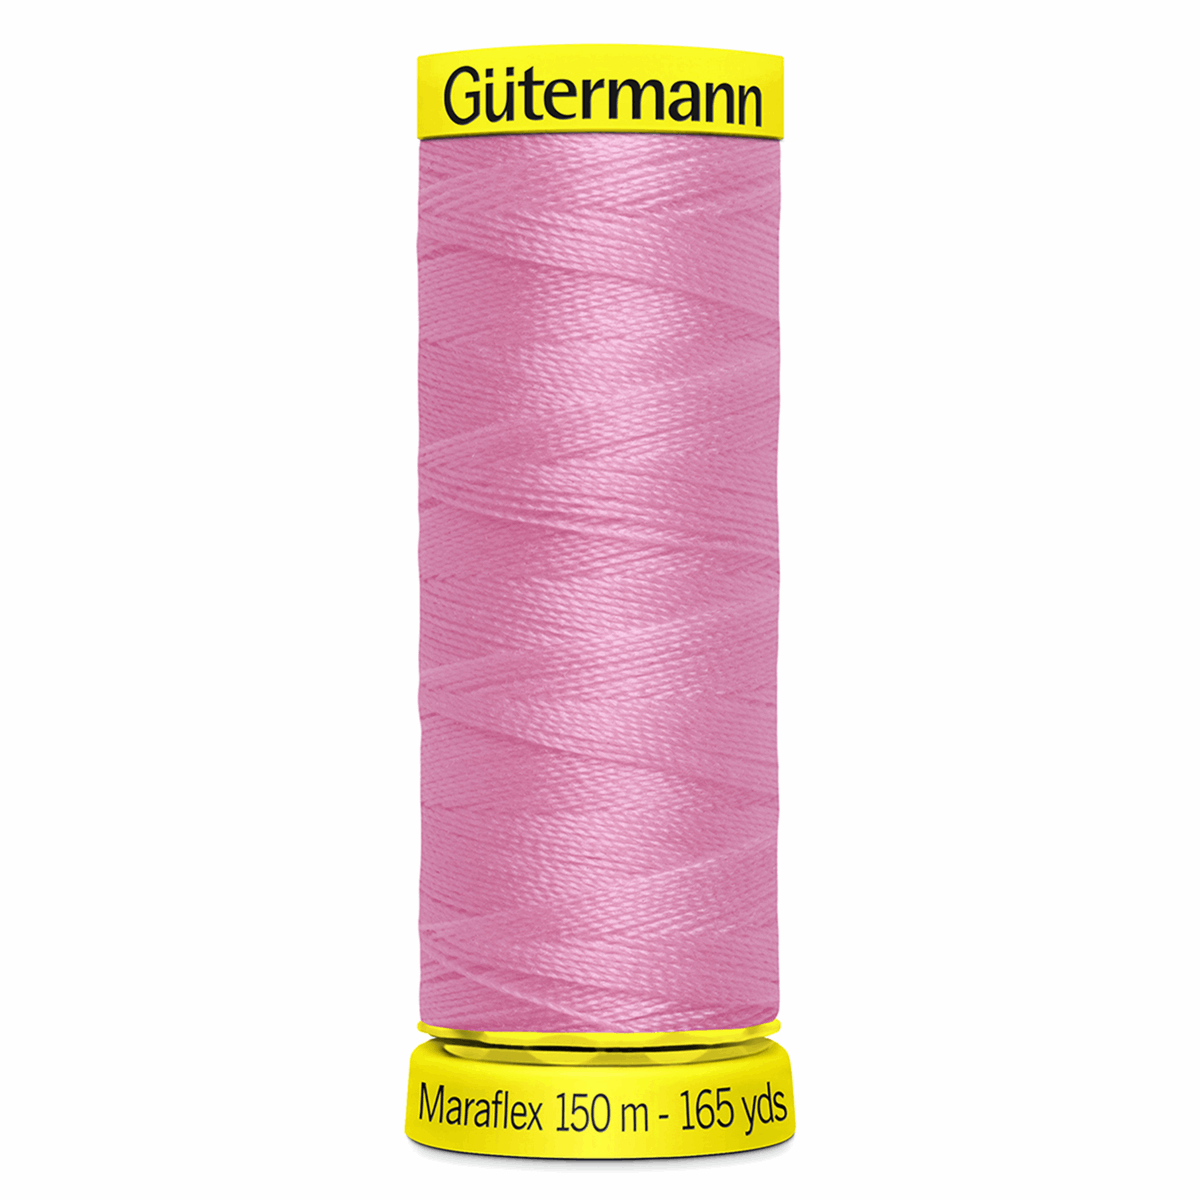 Gutermann Maraflex Elastic Sewing Thread 150m Rose Pink 663 